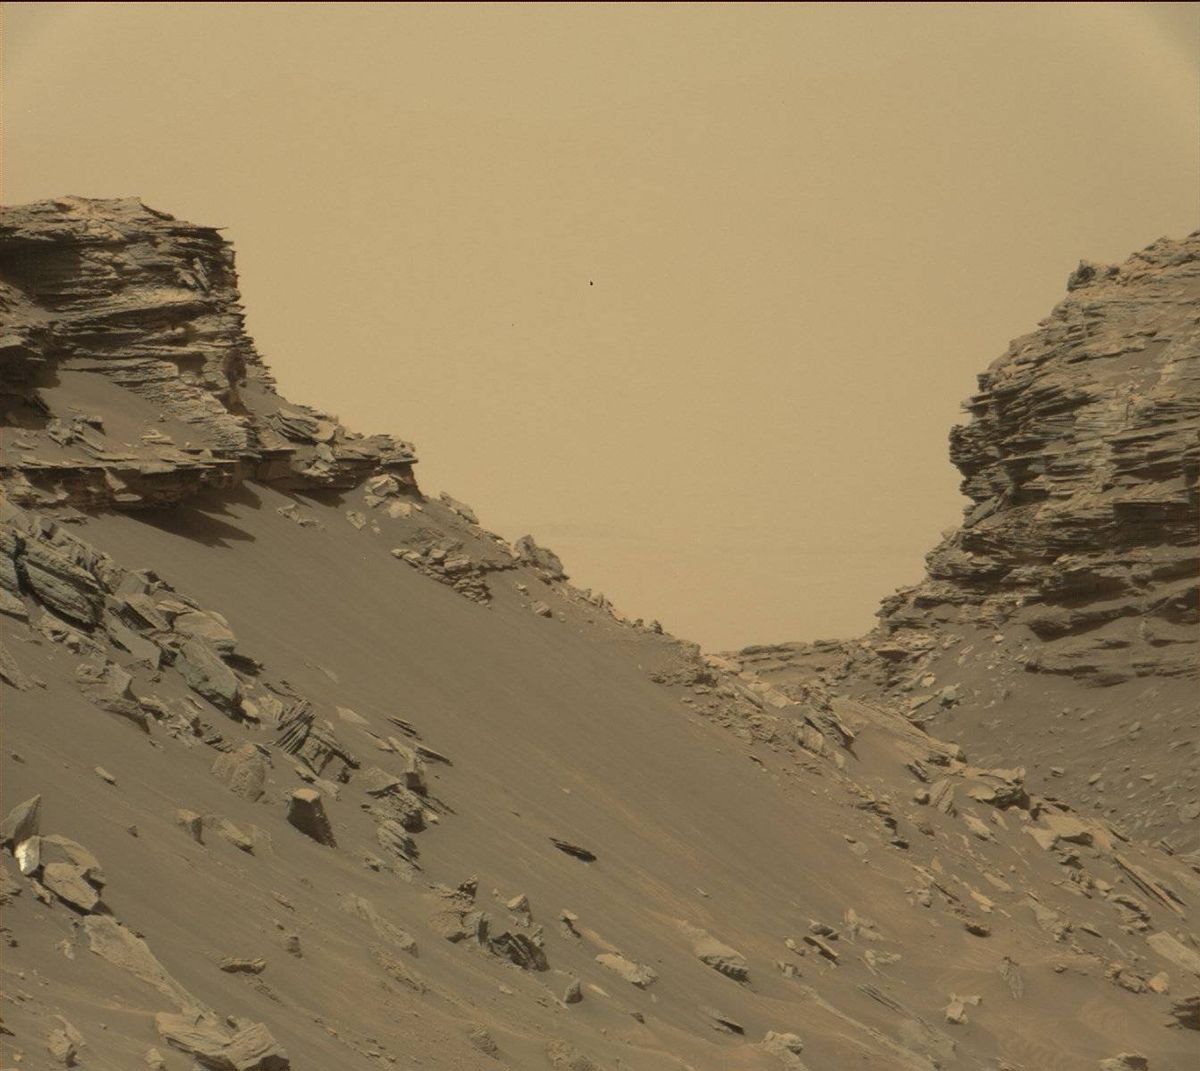 16 8020_mars-curiosity-rover-msl-rock-layers-PIA21042-full2NASA Mars Rover